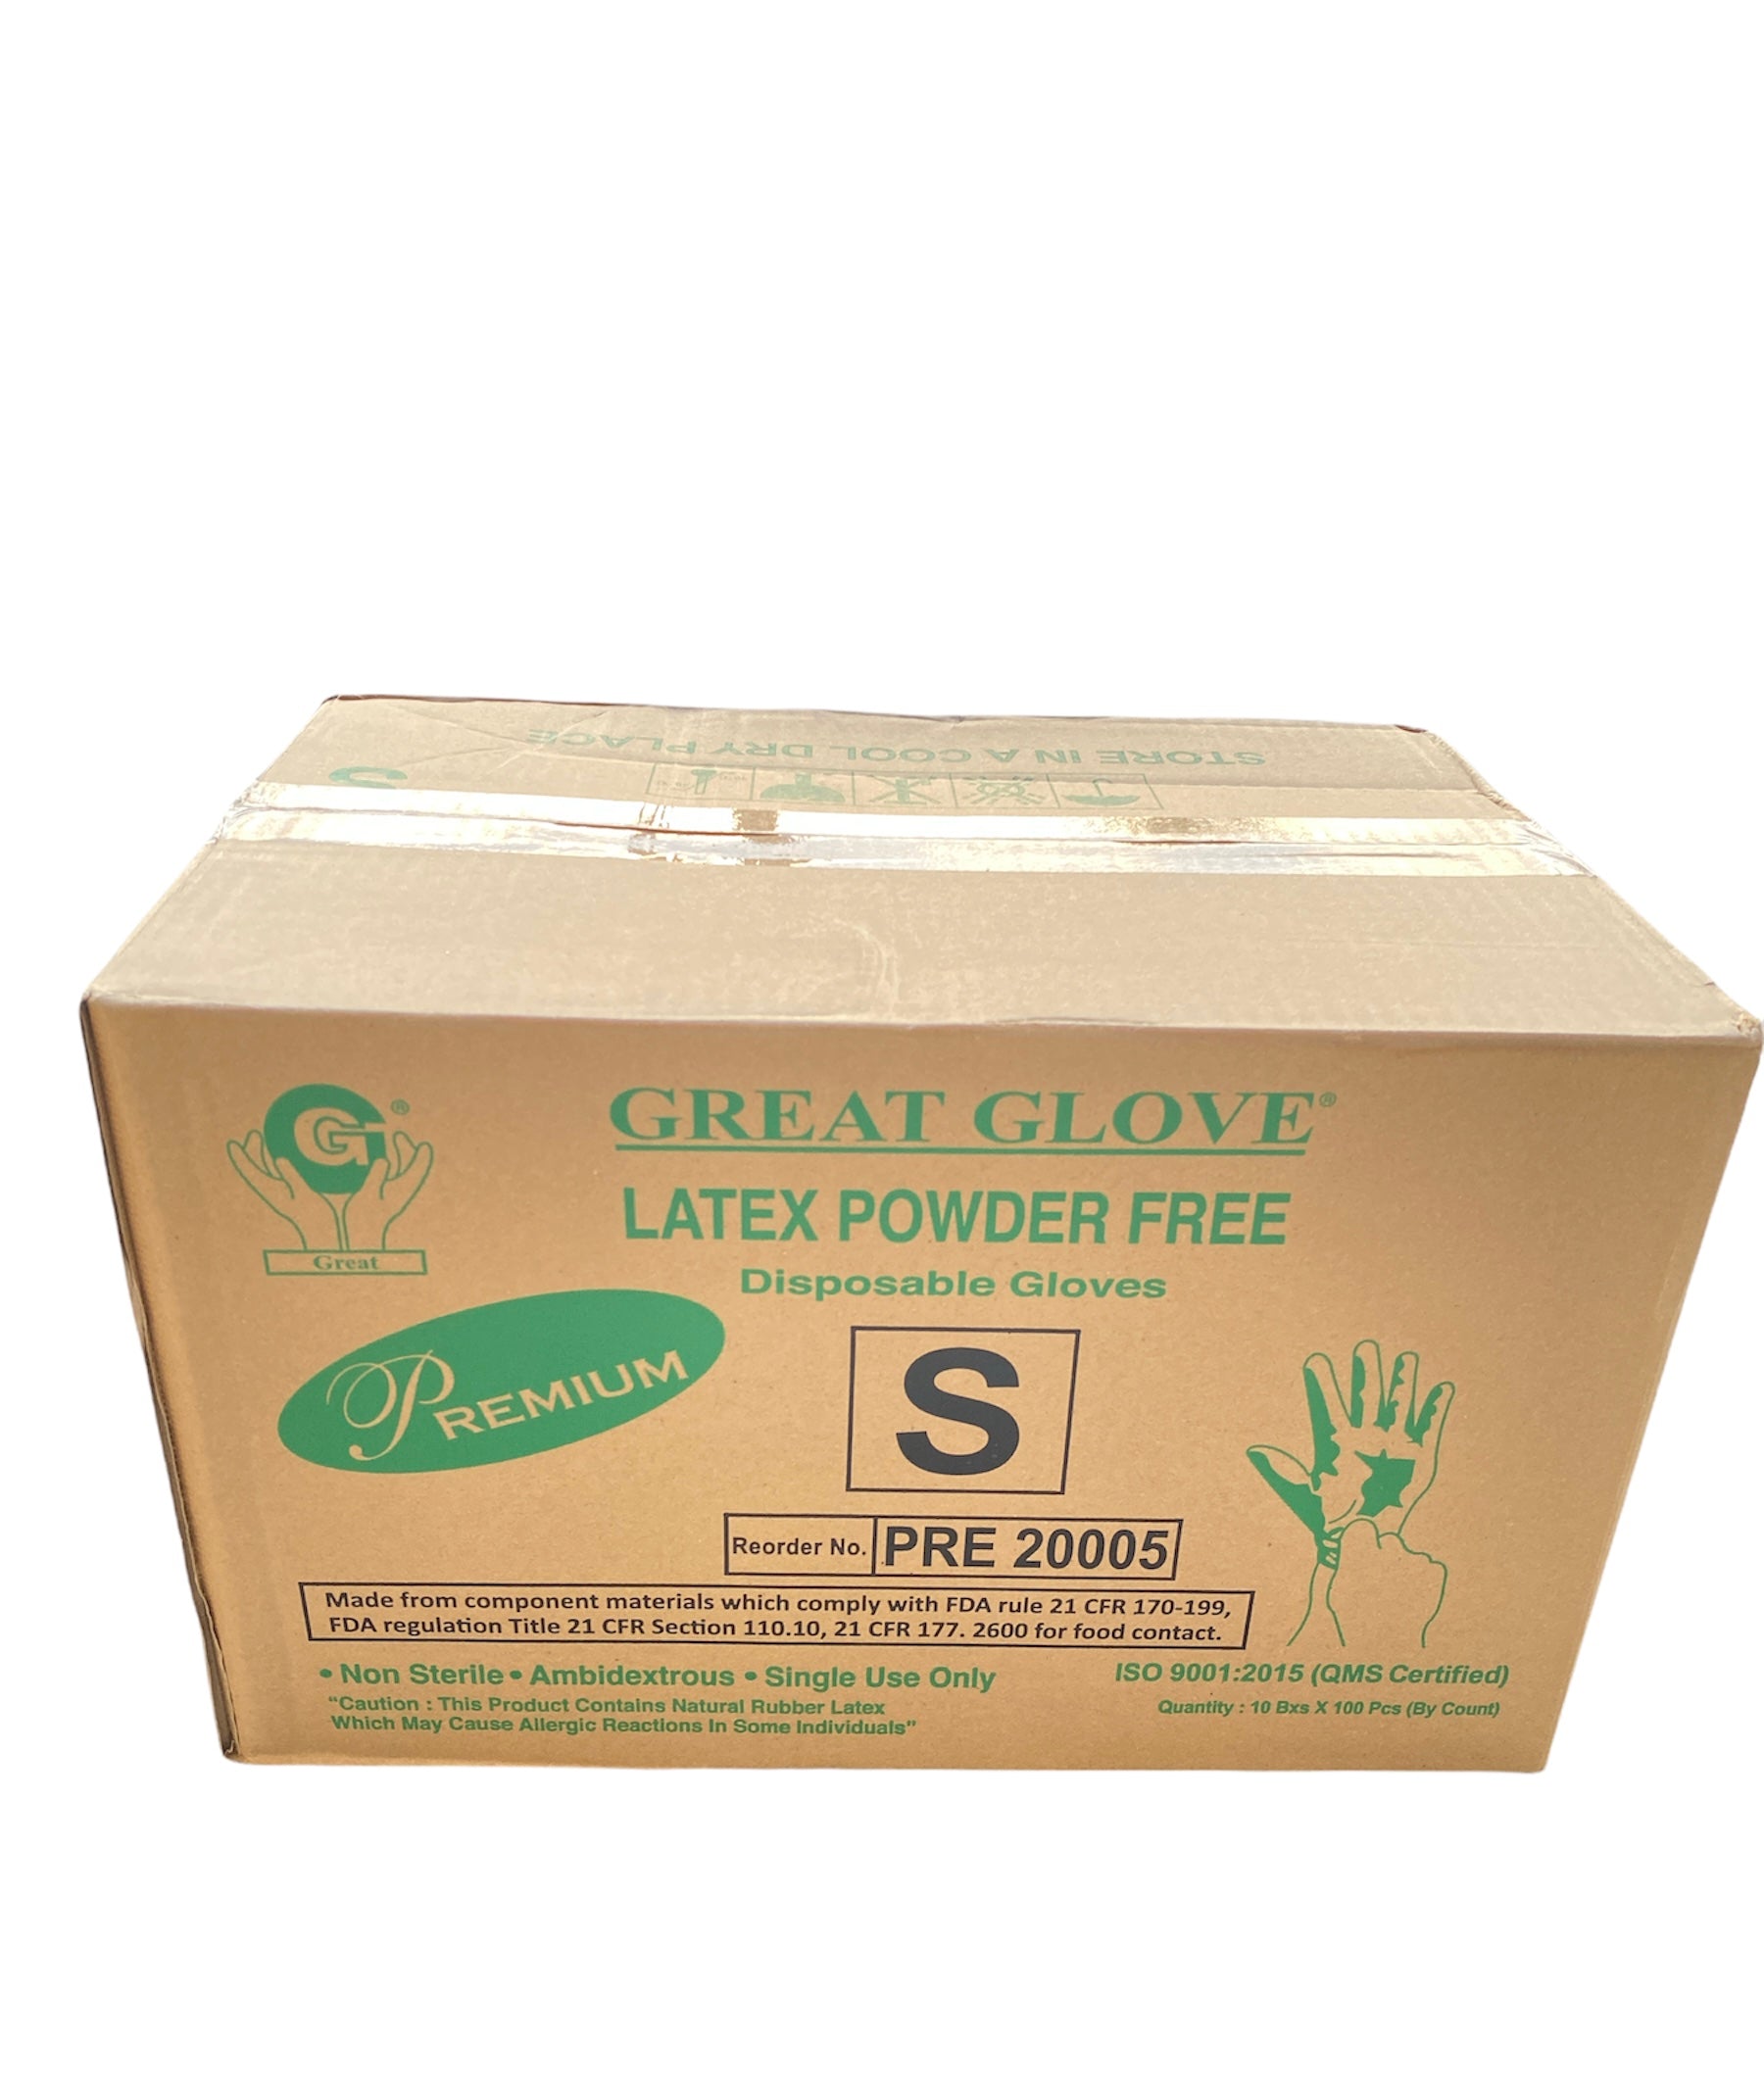 Great glove Latex Powder Free - Premier Nail Supply 